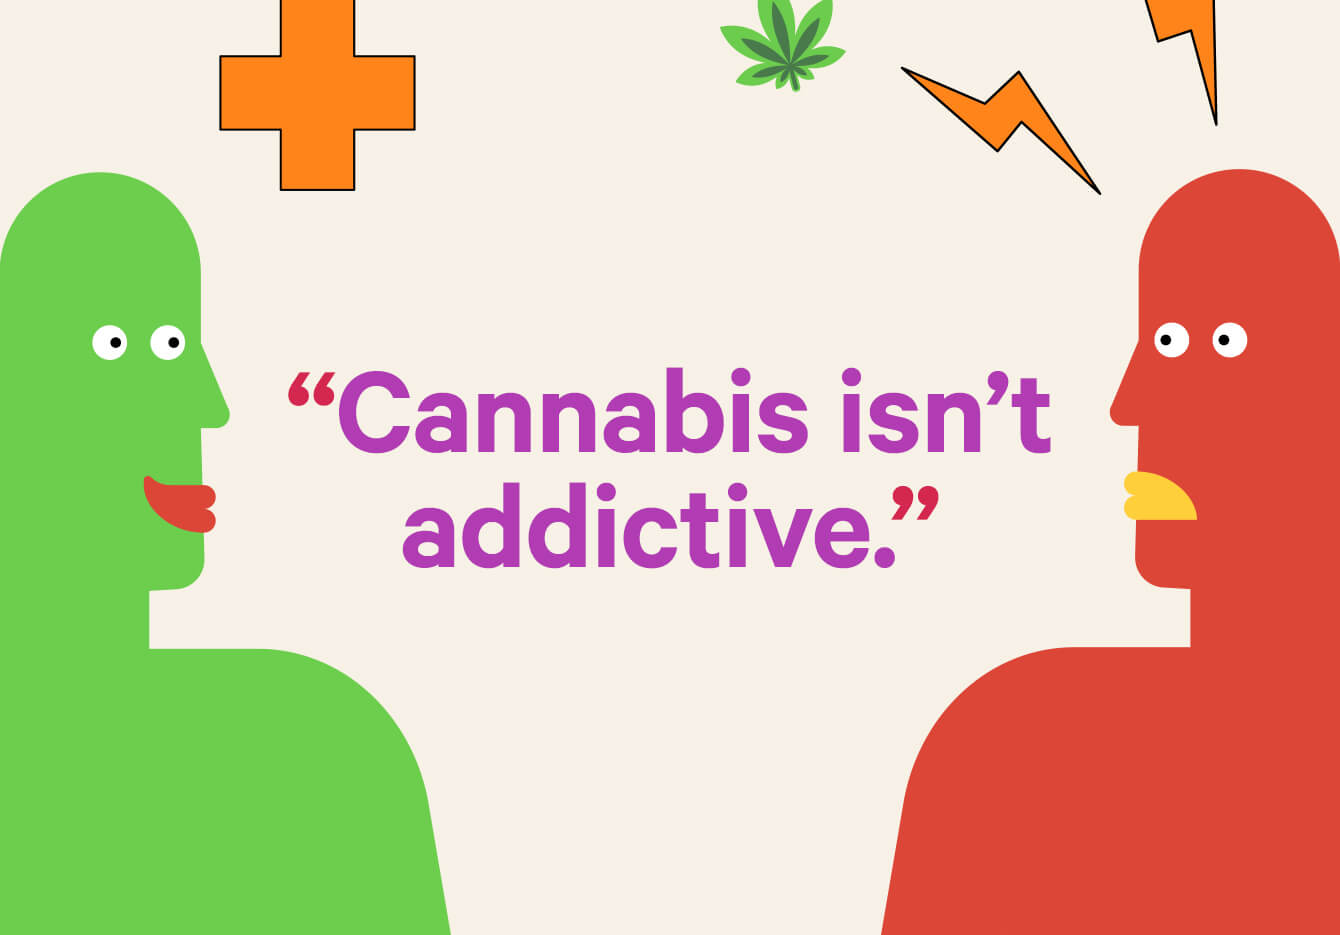 Question: Cannabis isn’t addictive